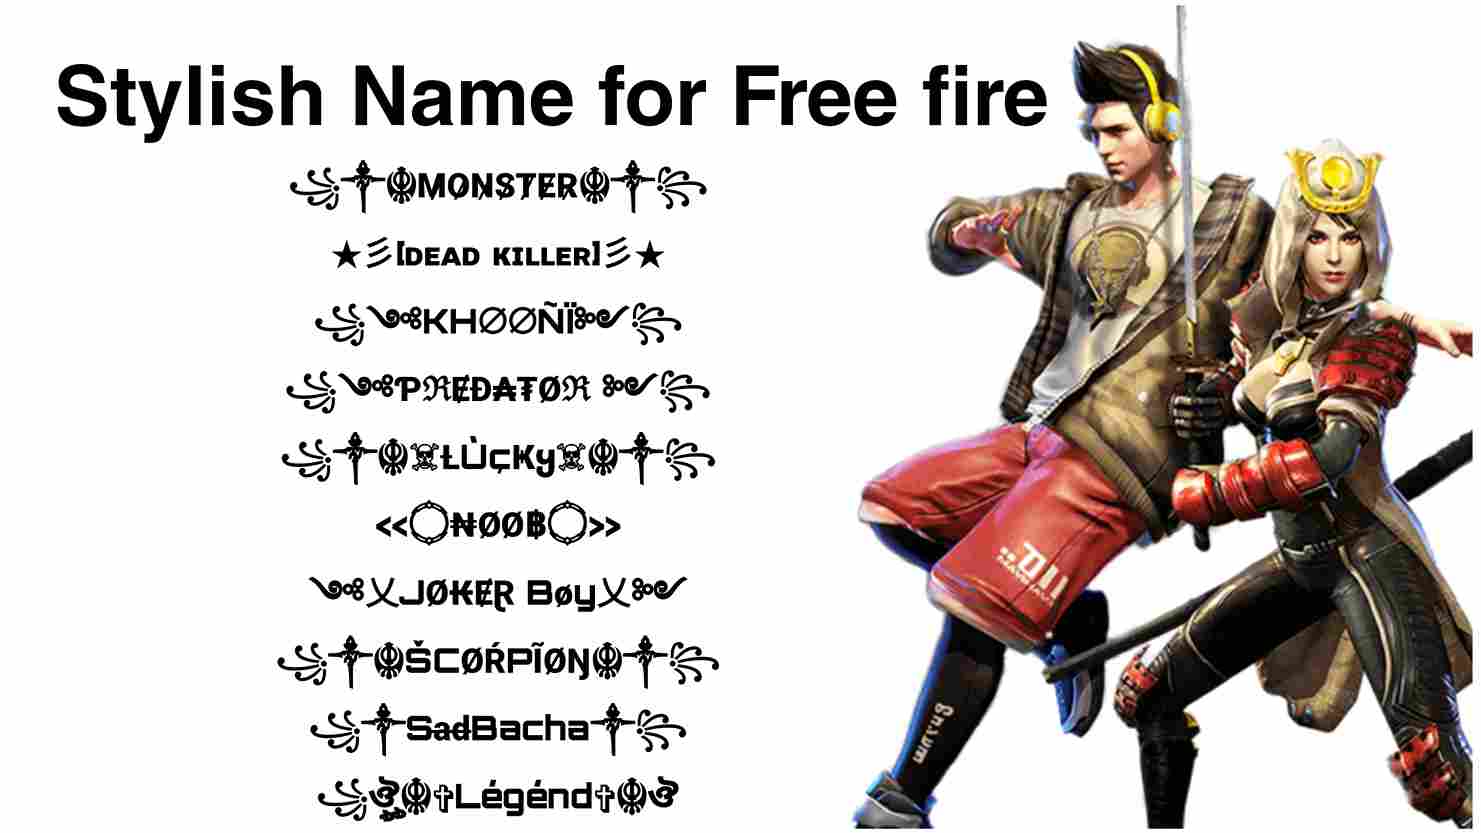 Best Free Fire Stylish Names